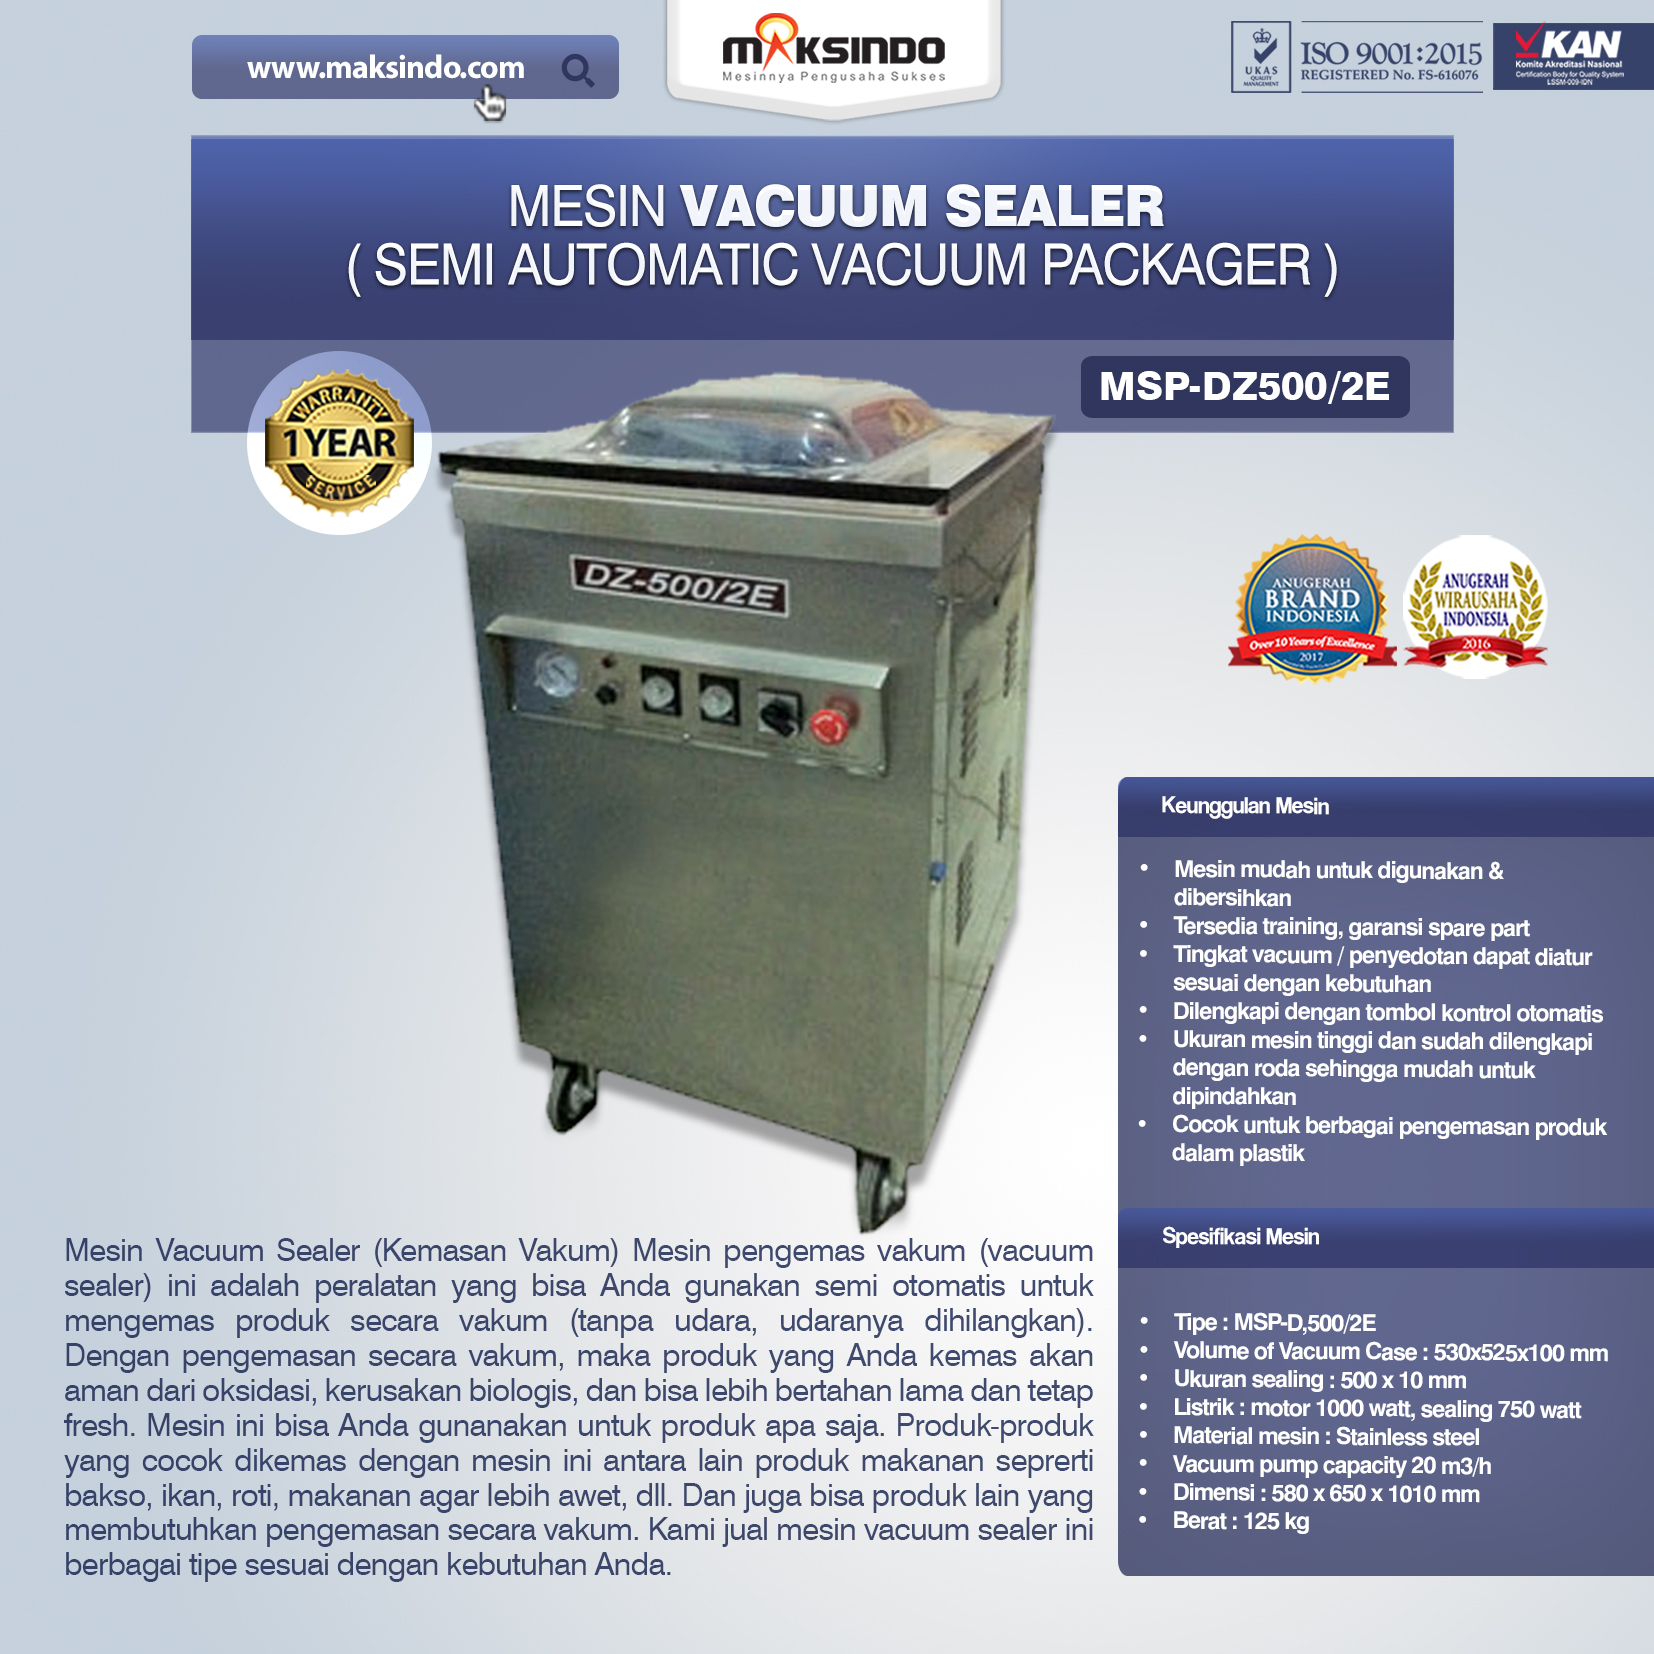 Jual Mesin Vacuum Sealer MSP-DZ500/2E di Solo